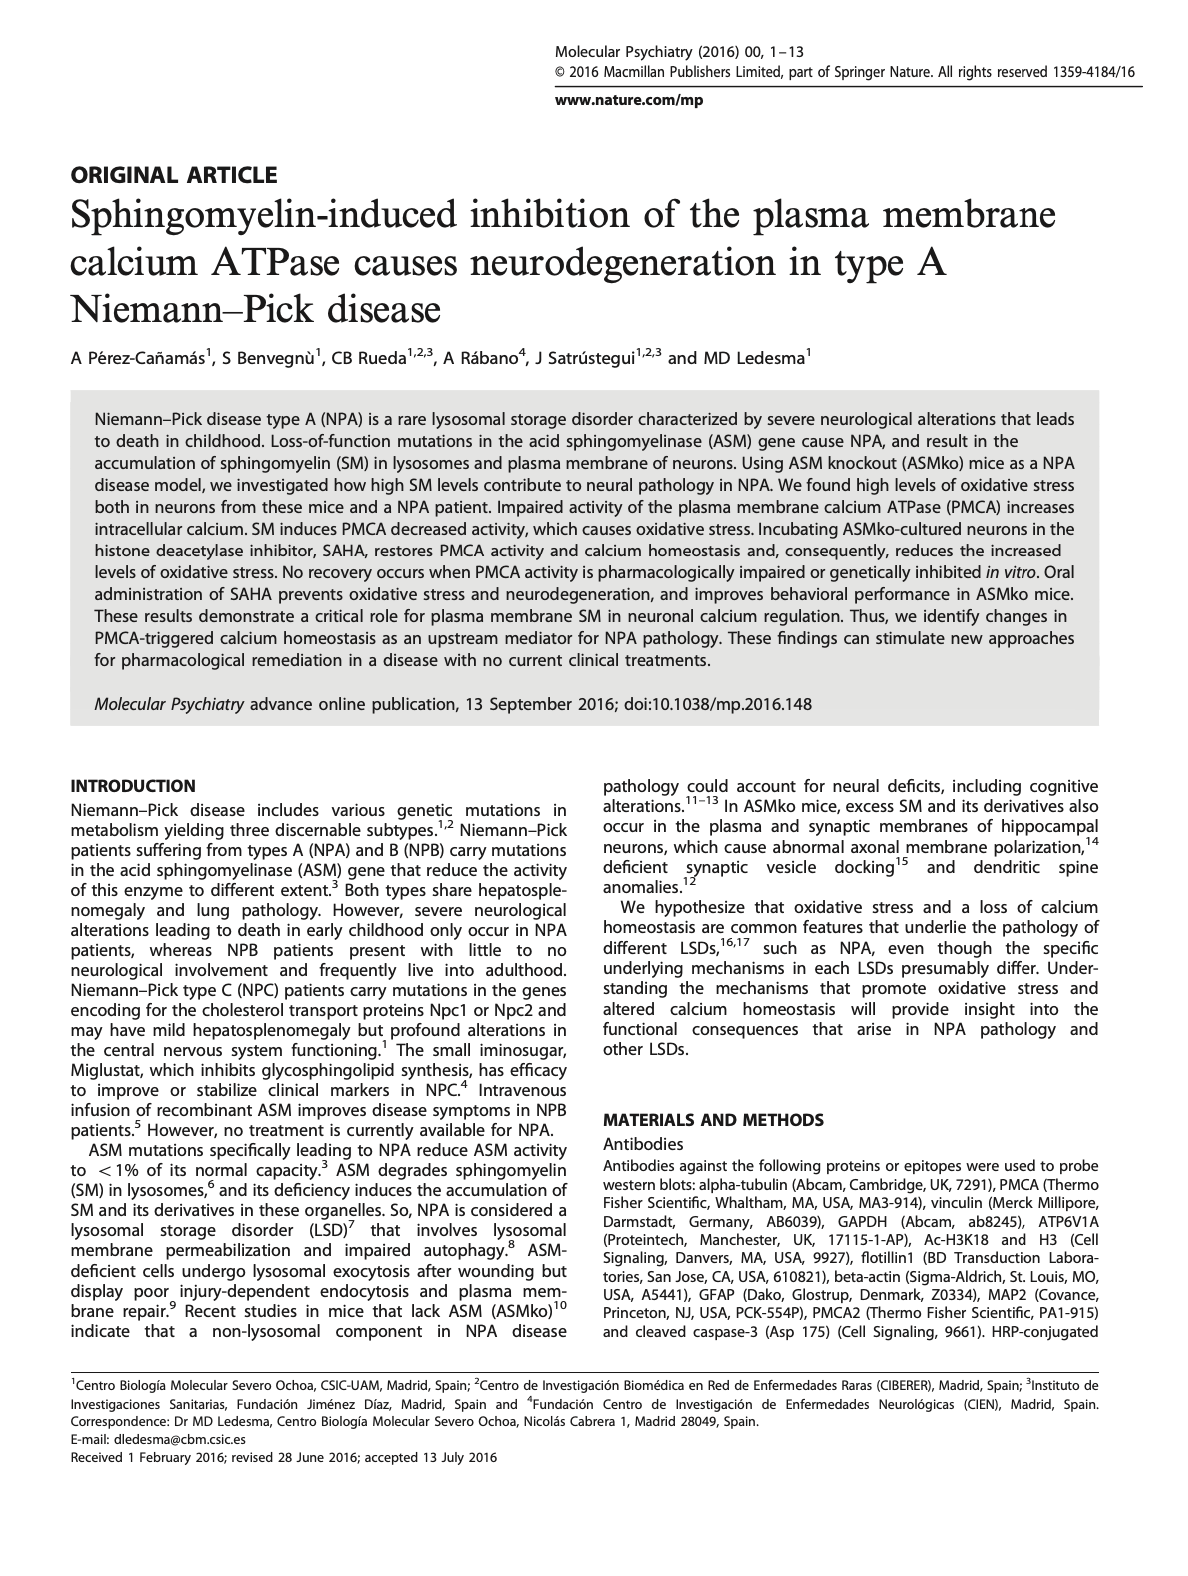 Sphingomyelin-induced inhibition of the plasma membrane calcium ATPase causes neurodegeneration in type A Niemann–Pick disease